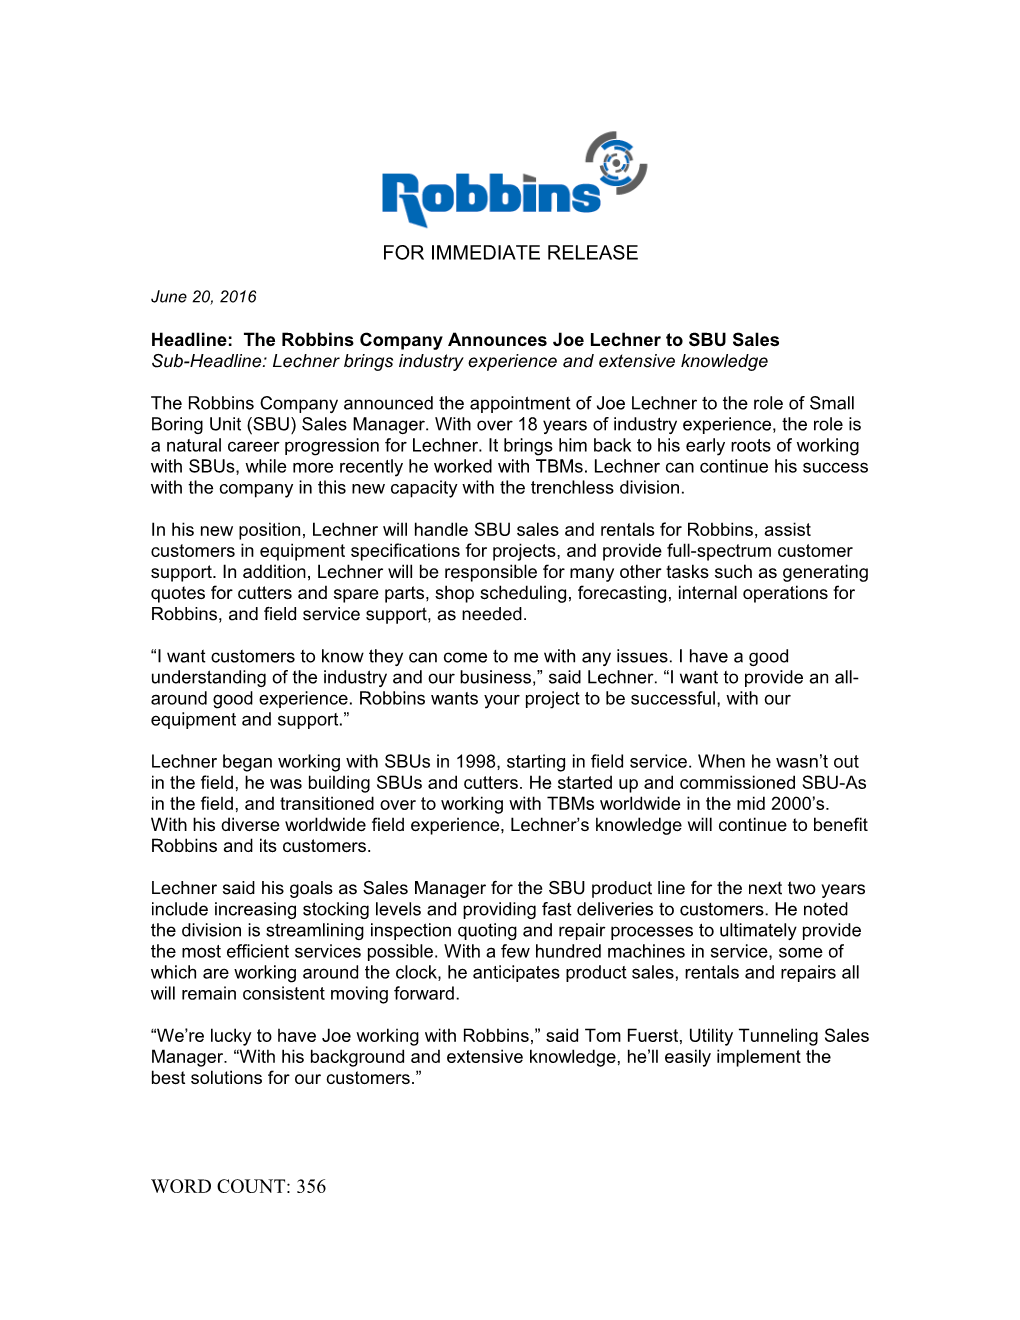 Headline: the Robbins Company Announces Joe Lechner to SBU Sales